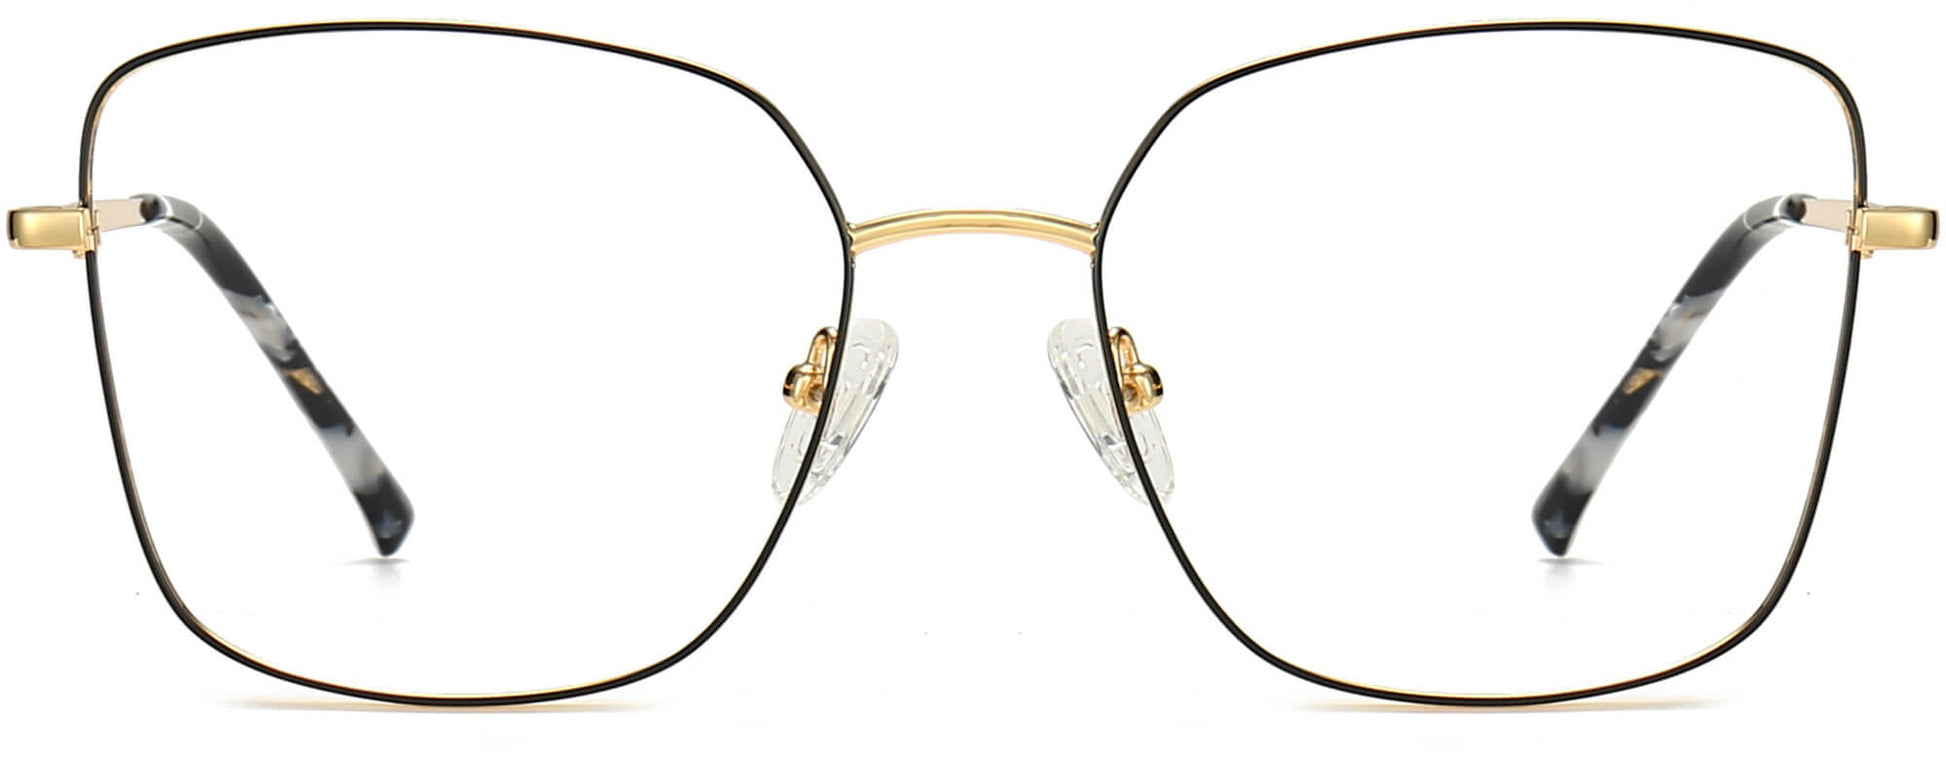 Virginia Cateye Black Eyeglasses from ANRRI, front view